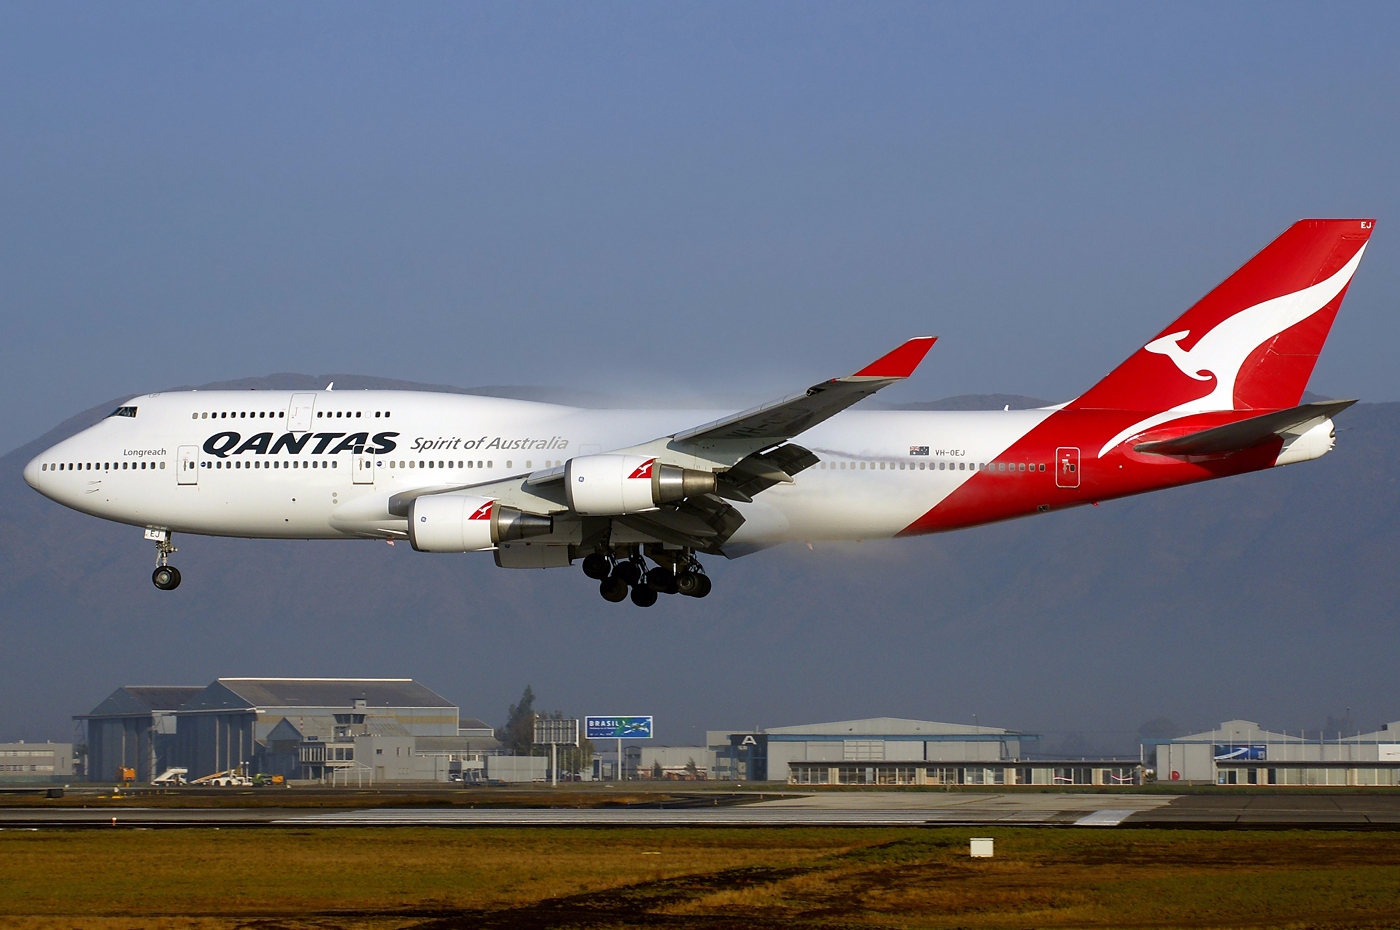 Qantas Boeing 400er Approaching To Land Aircraft Wallpaper